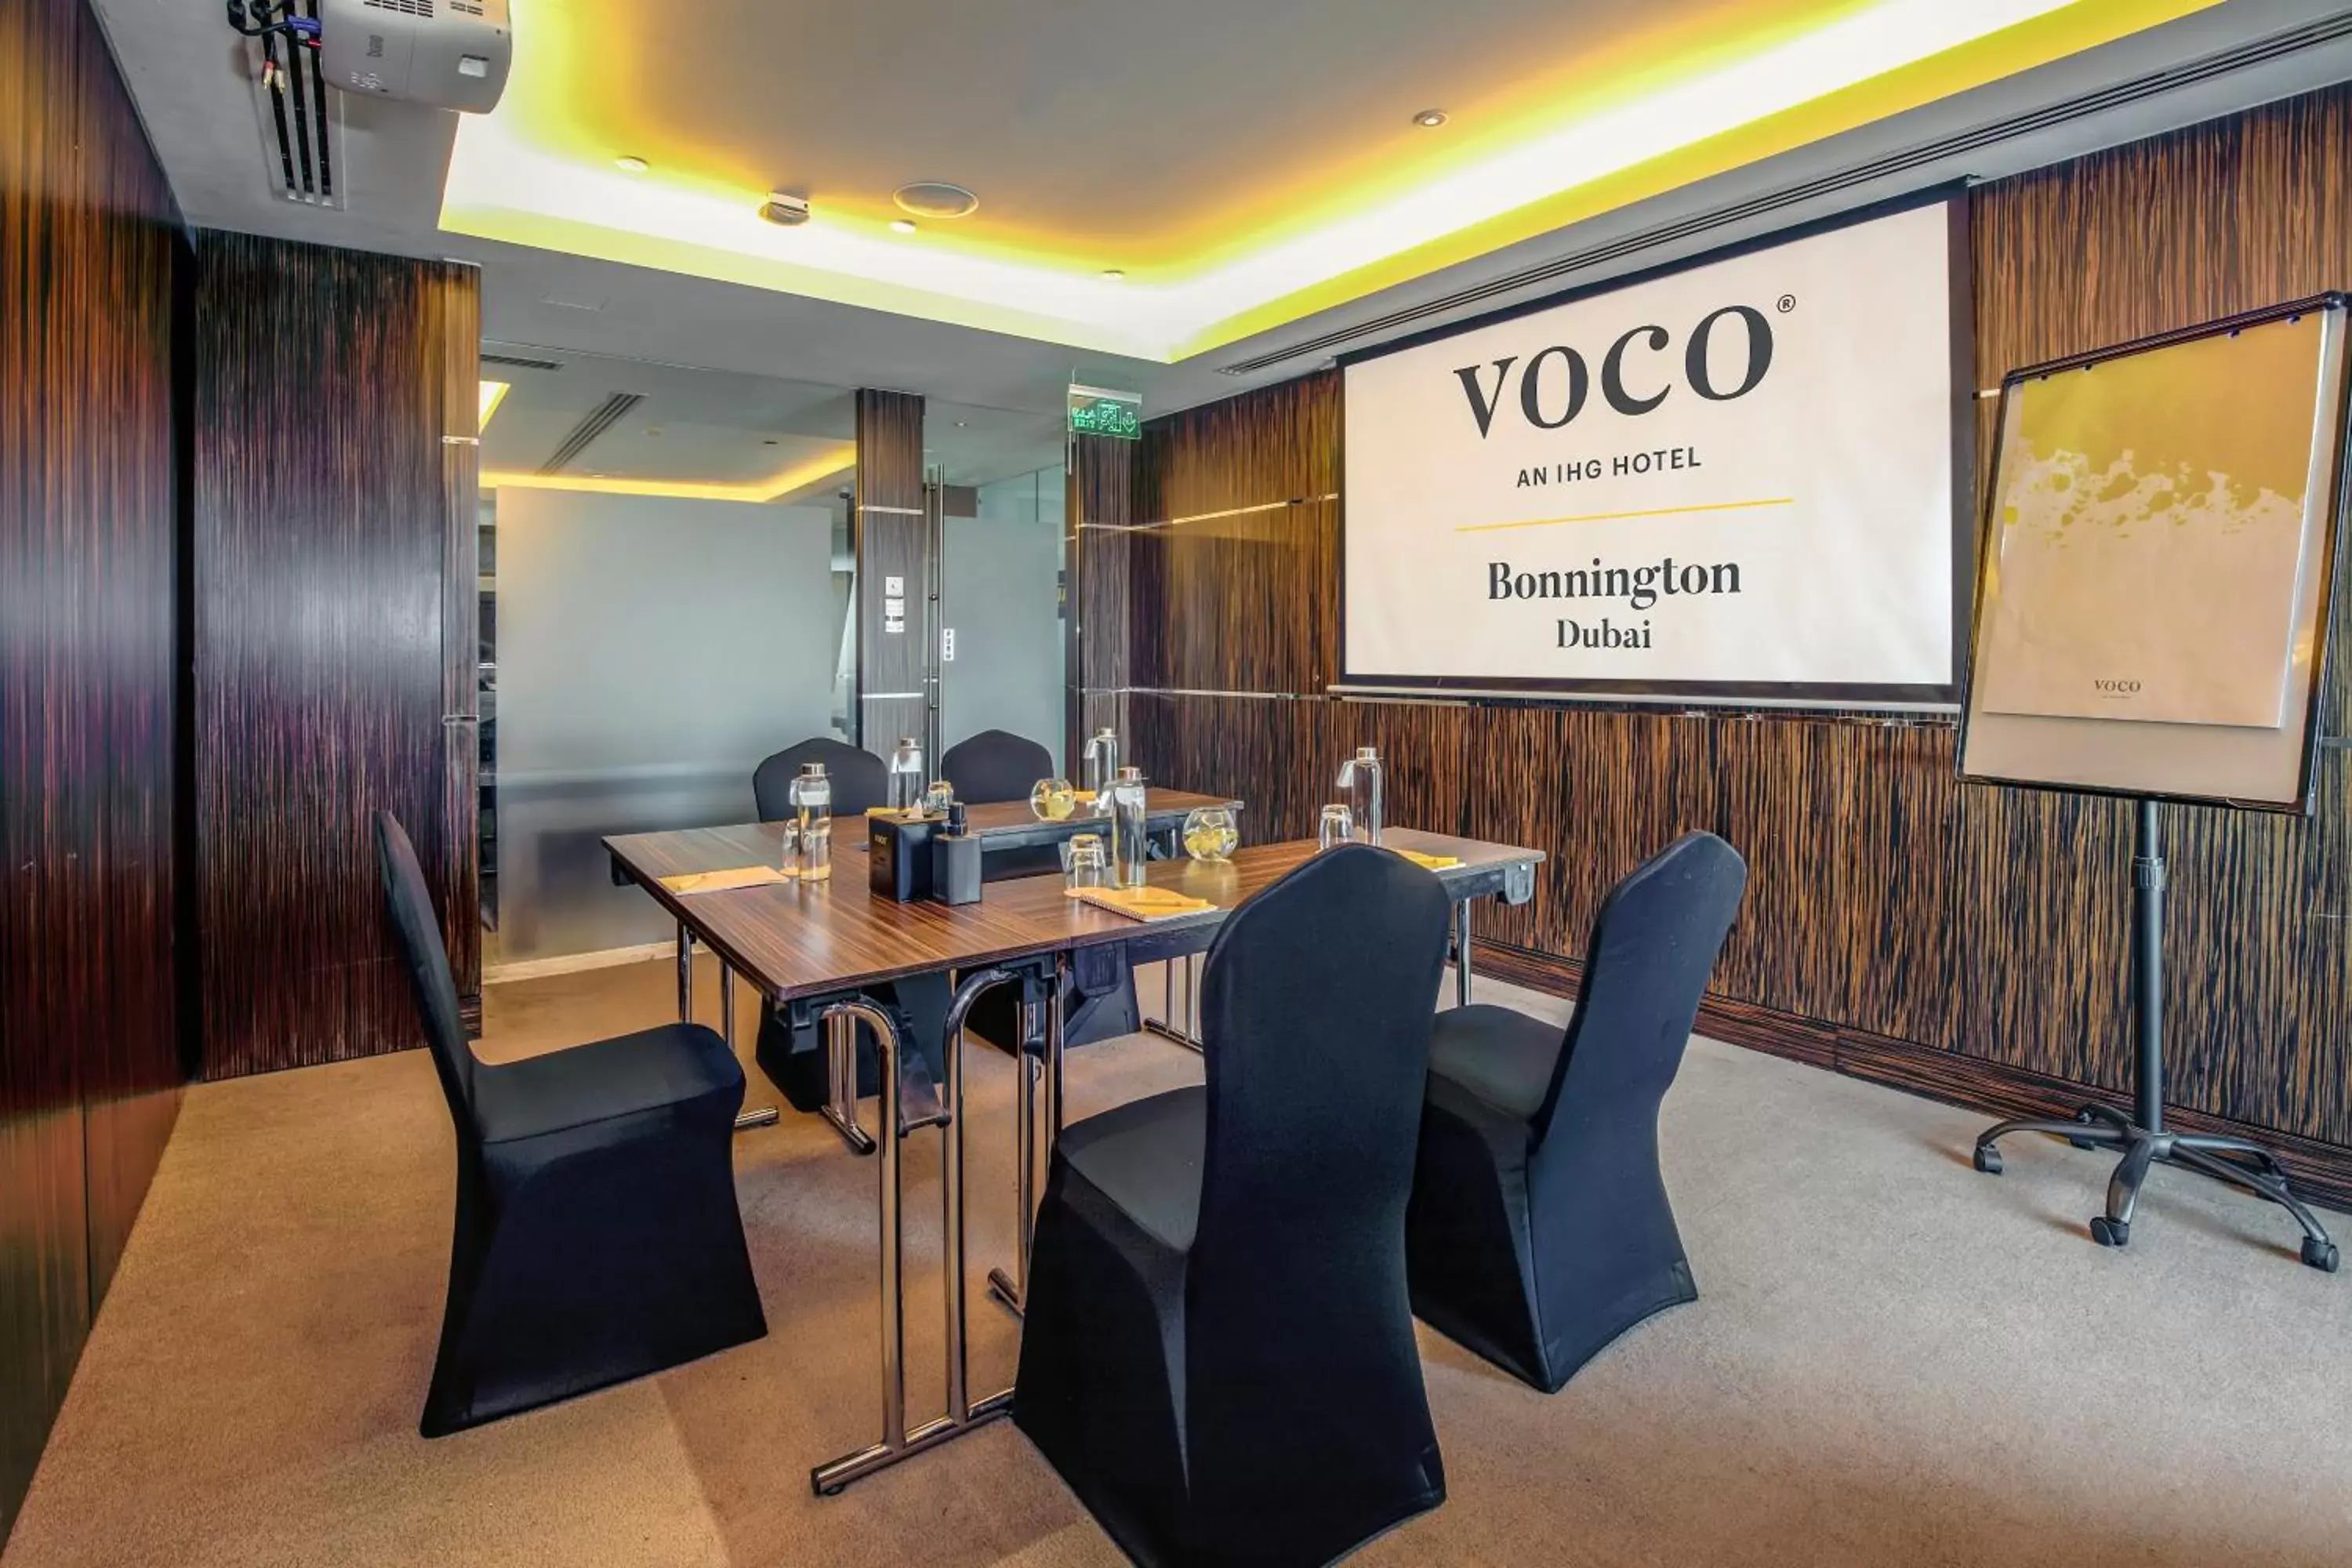 Business facilities in voco - Bonnington Dubai, an IHG Hotel